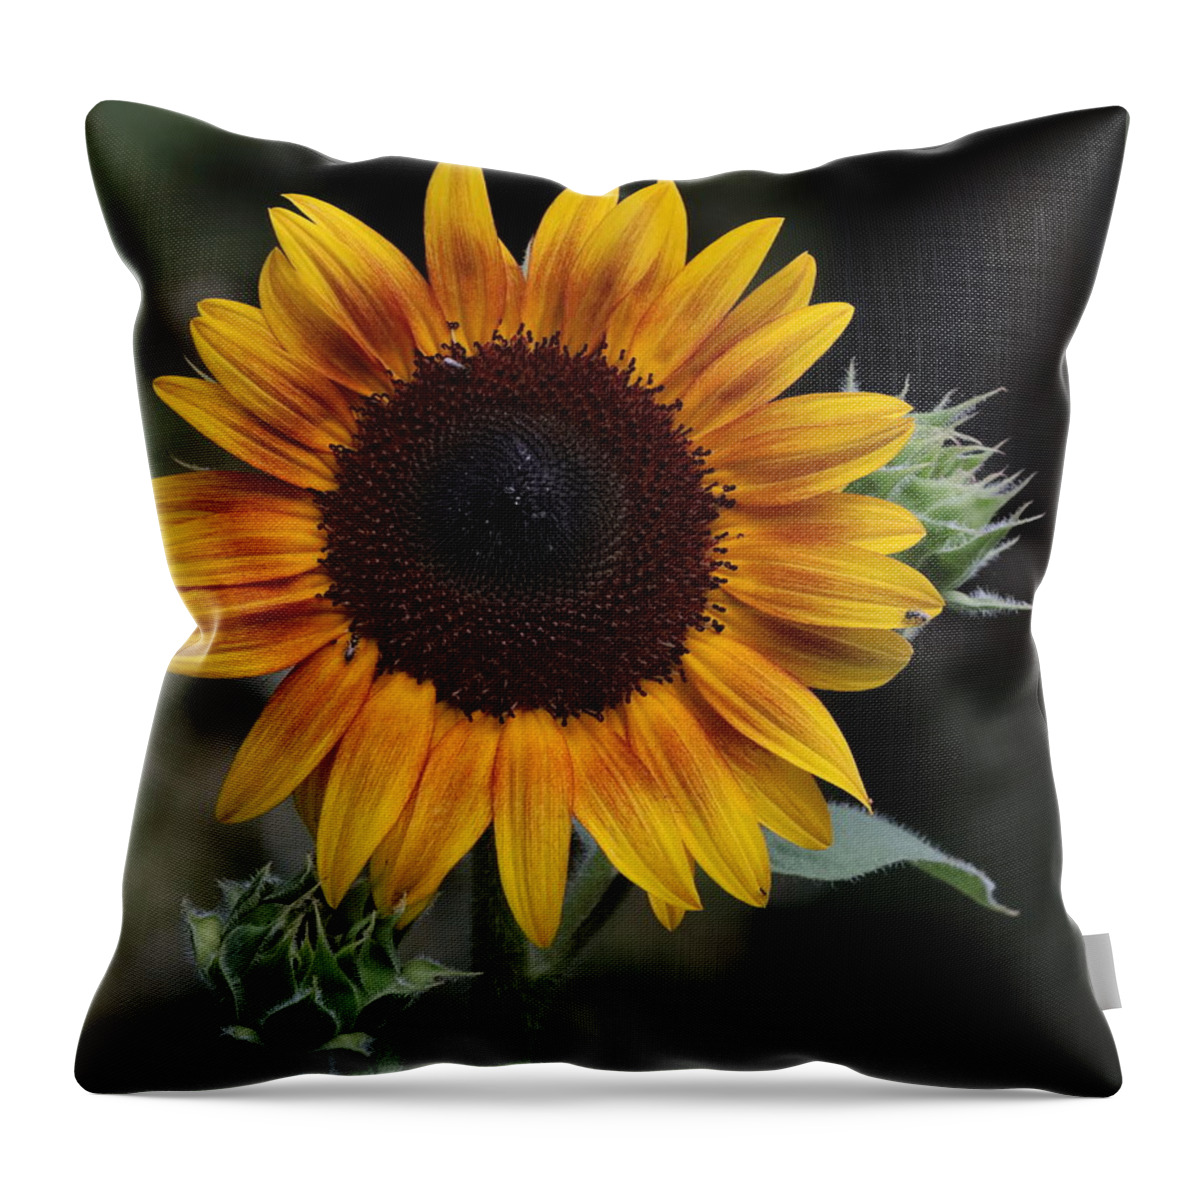 Sunflower Throw Pillow featuring the photograph Sunflower by John Moyer